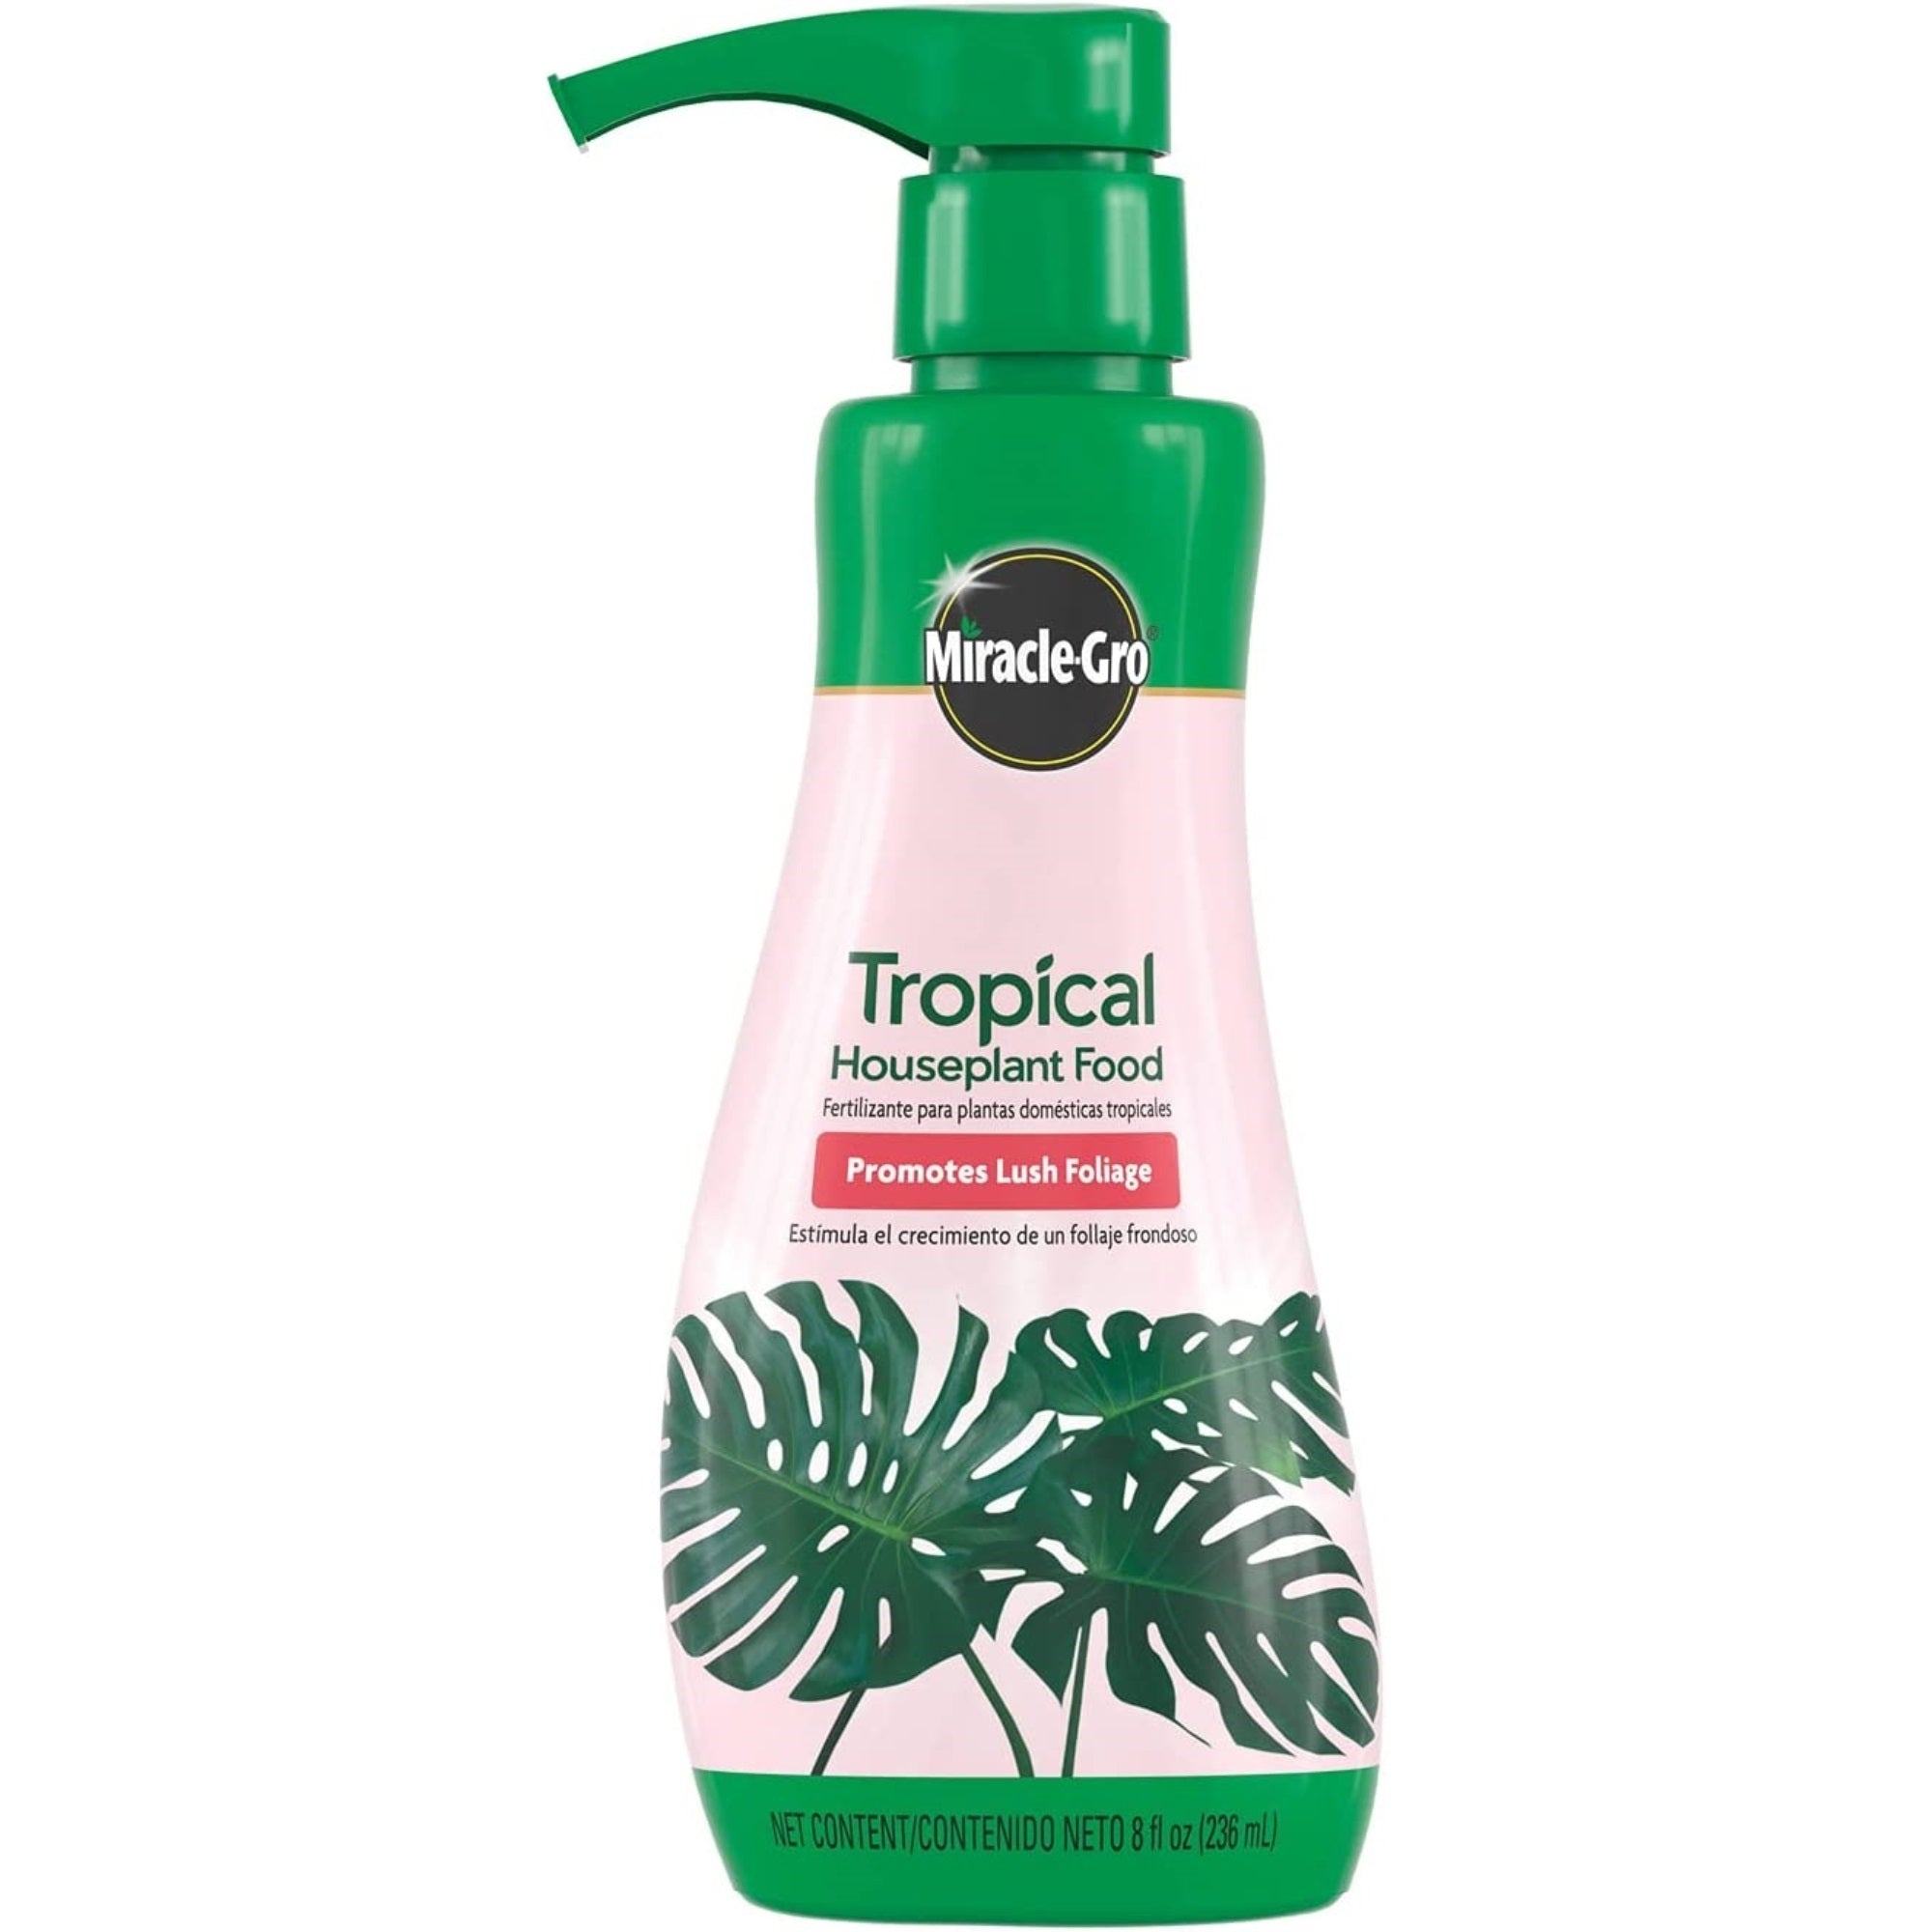 Miracle-Gro Tropical Houseplant Food - Liquid Fertilizer for Tropical Houseplants, 8 fl. oz.